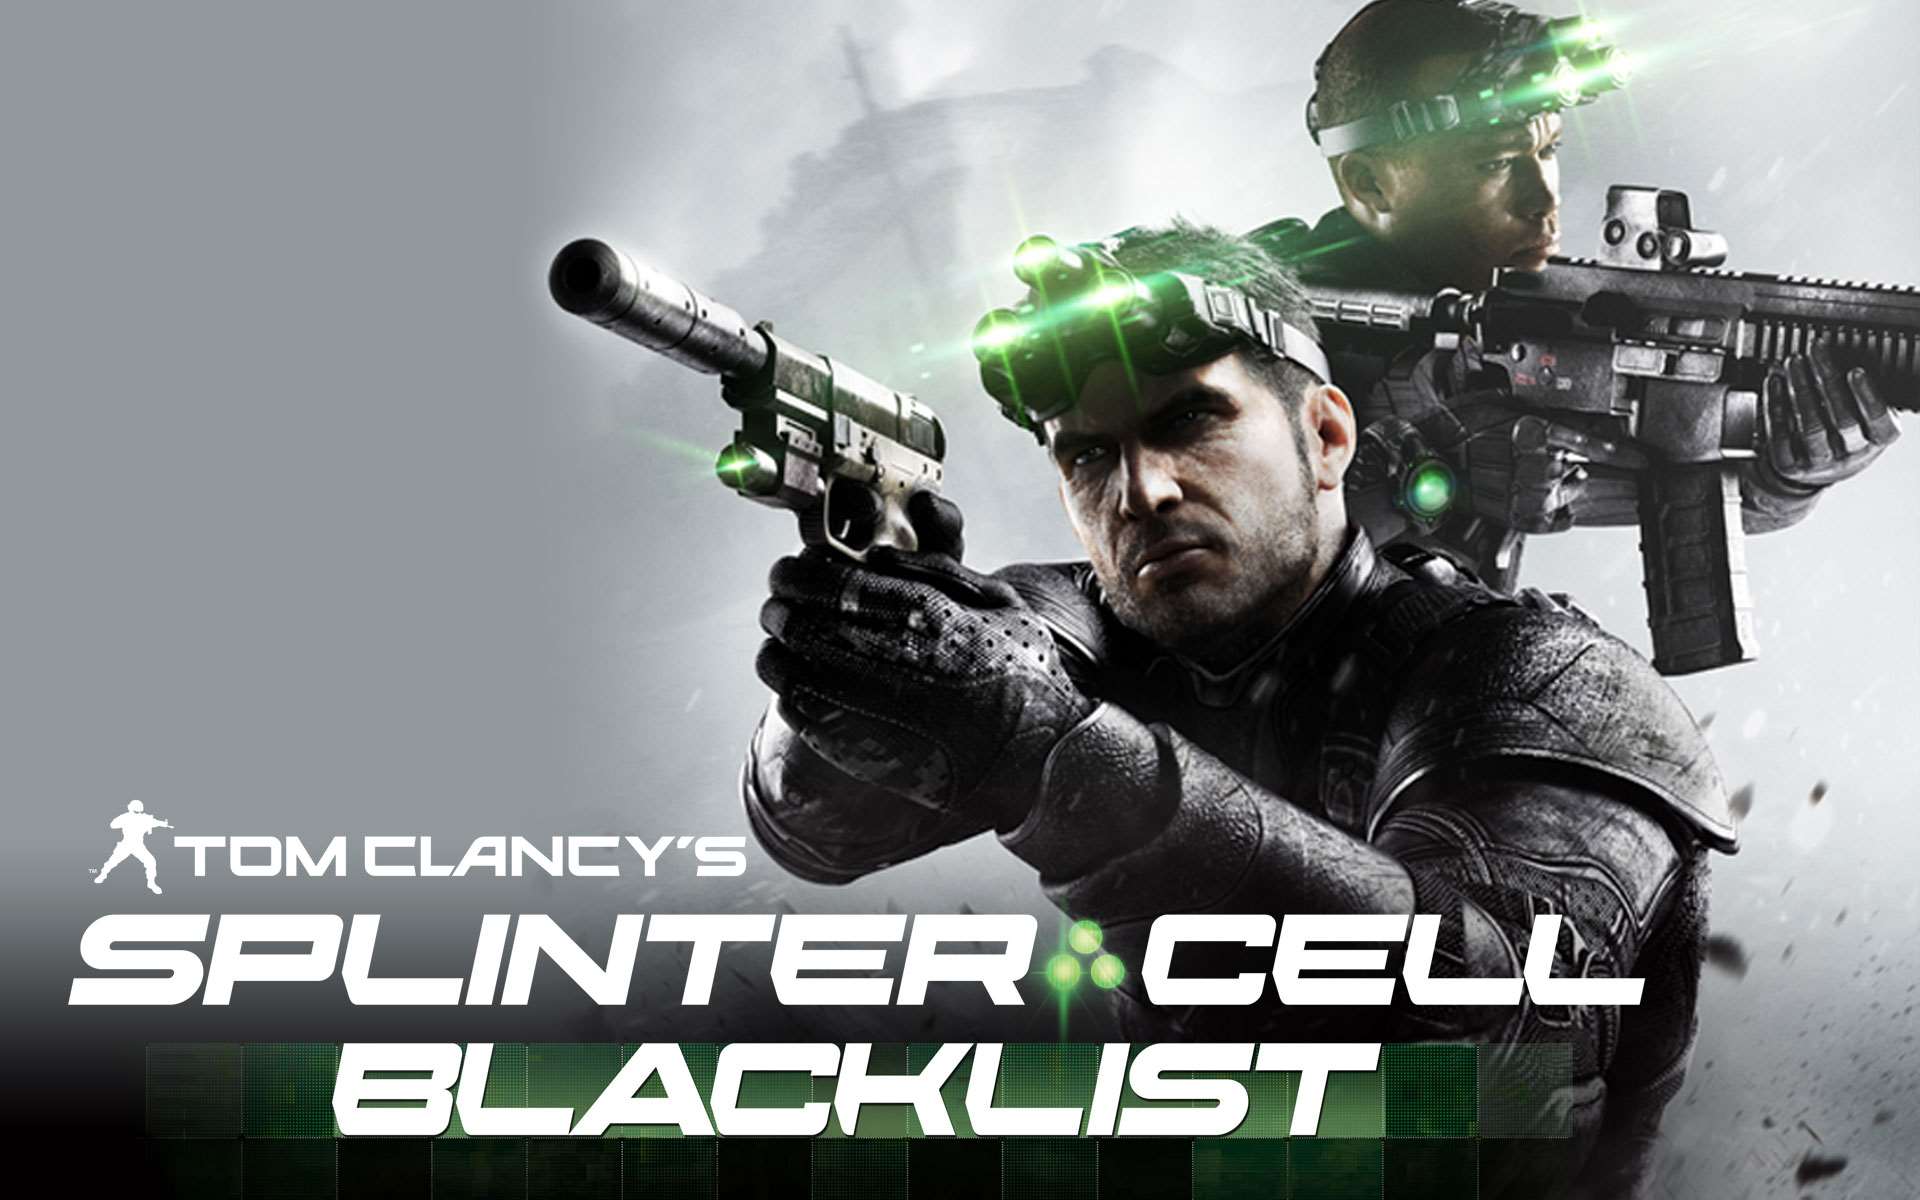 Splinter cell blacklist вылетает. Tom Clancy’s Splinter Cell. Tom Clancy’s Splinter Cell: Blacklist. Tom Clancy s Splinter Cell: Blacklist. Tom Clancy’s Splinter Cell: Blacklist 2.